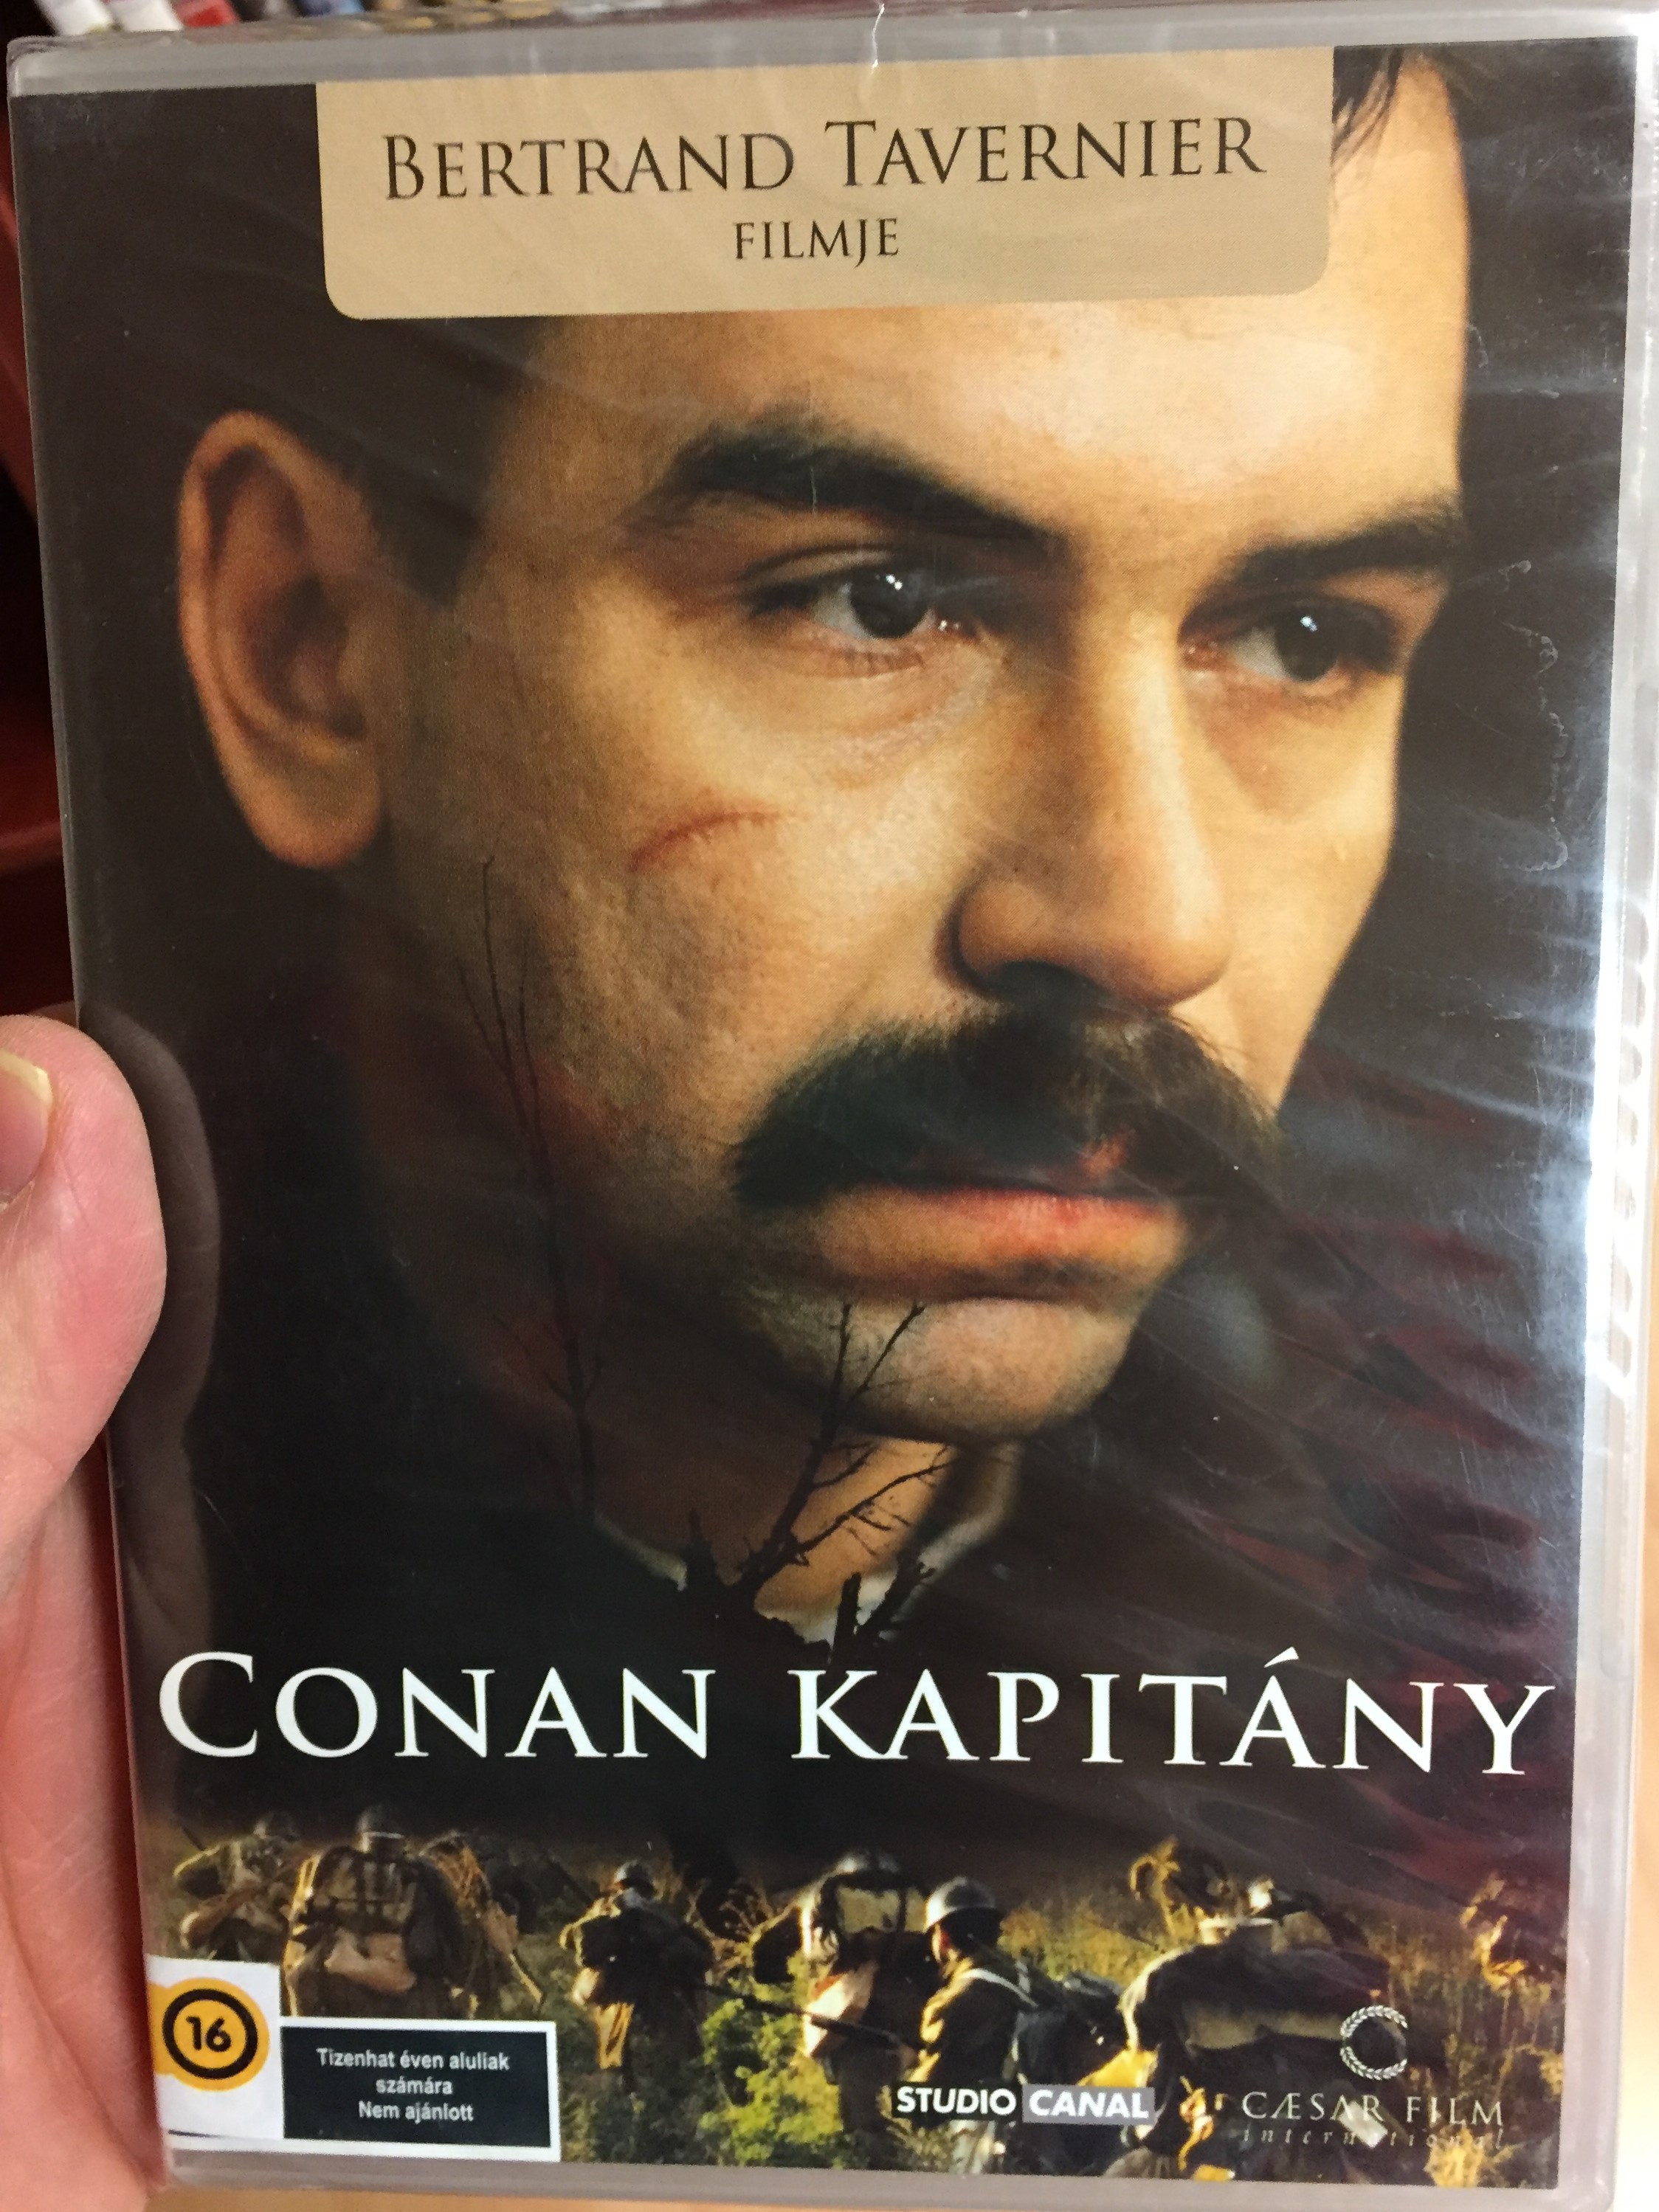 capitaine-conan-dvd-1996-conan-kapit-ny-directed-by-bertrand-tavernier-1.jpg